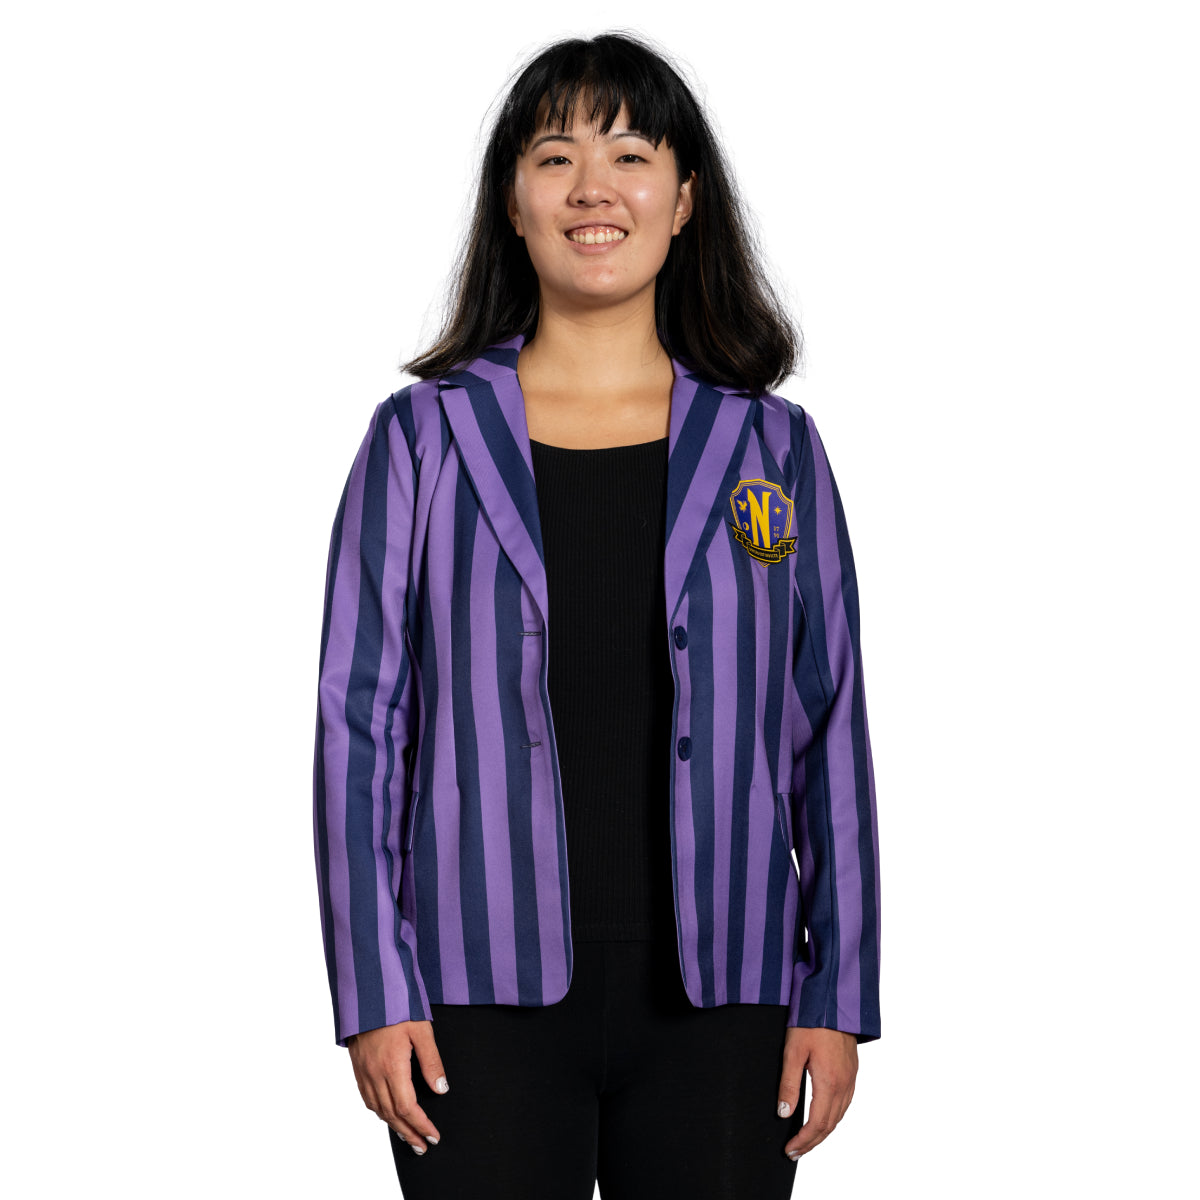 Wednesday Addams Purple Blazer Jacket with School Crest Halloween Costume Cosplay Open Blazer